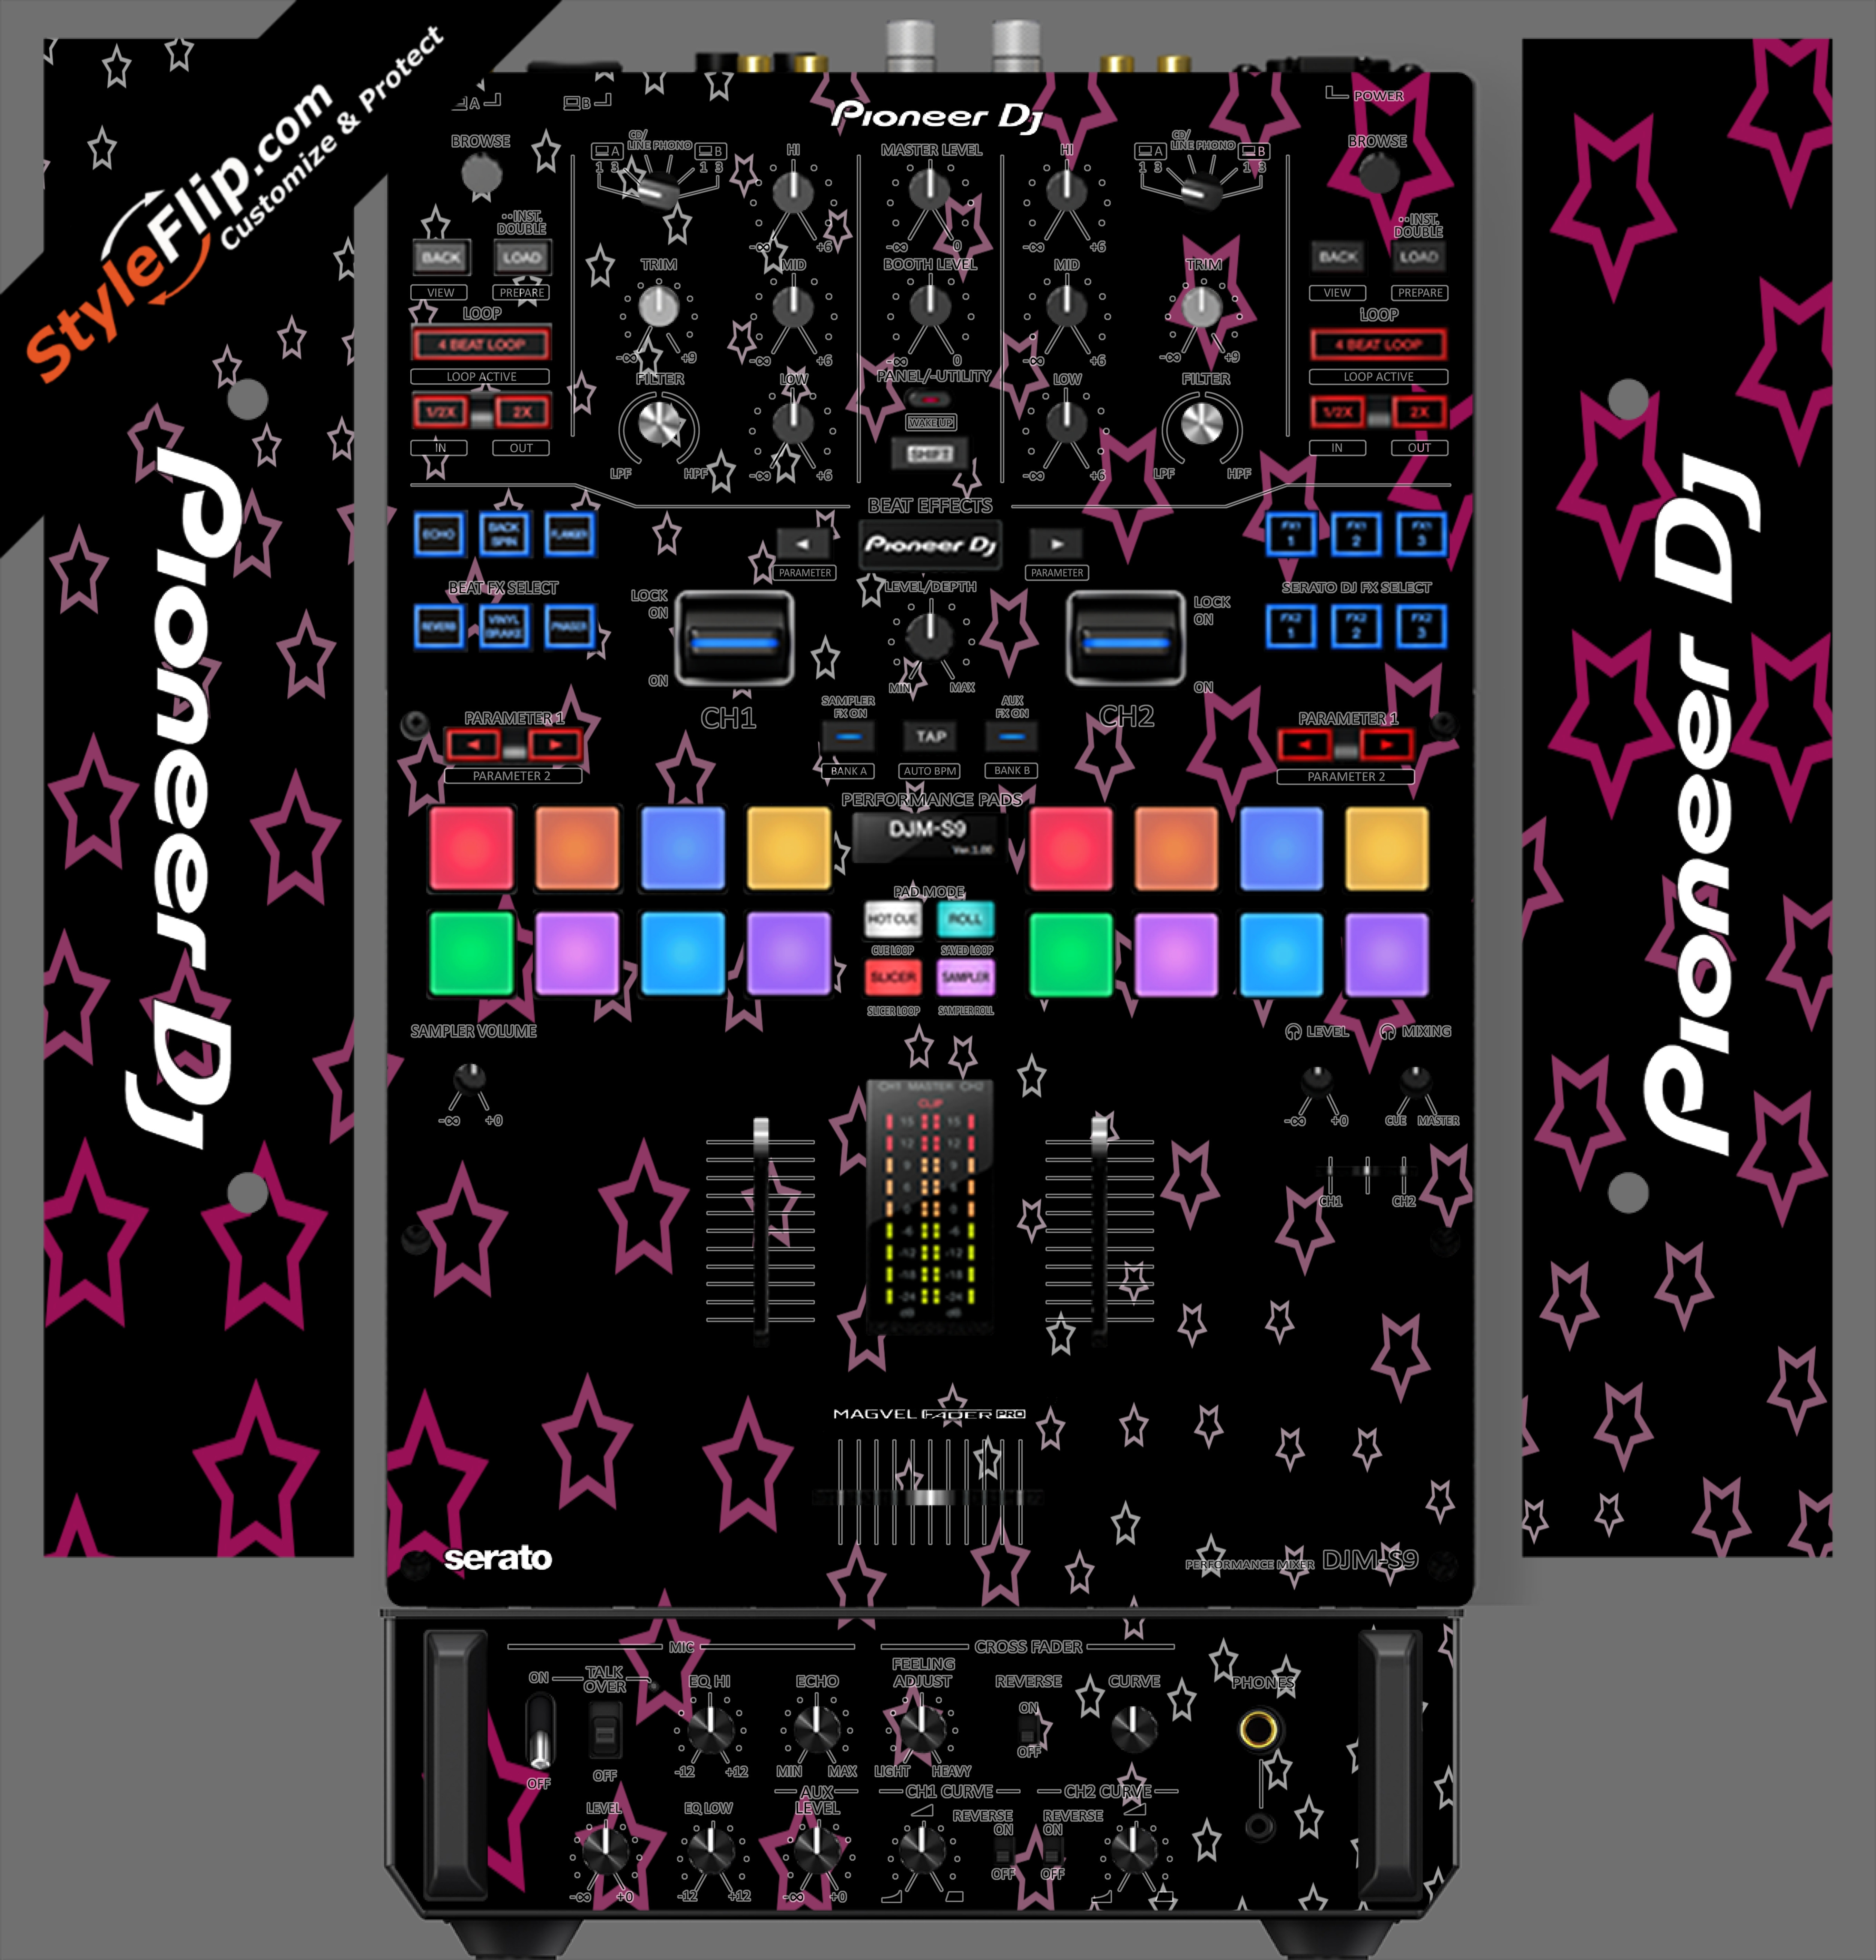 Starry Pioneer DJM S9